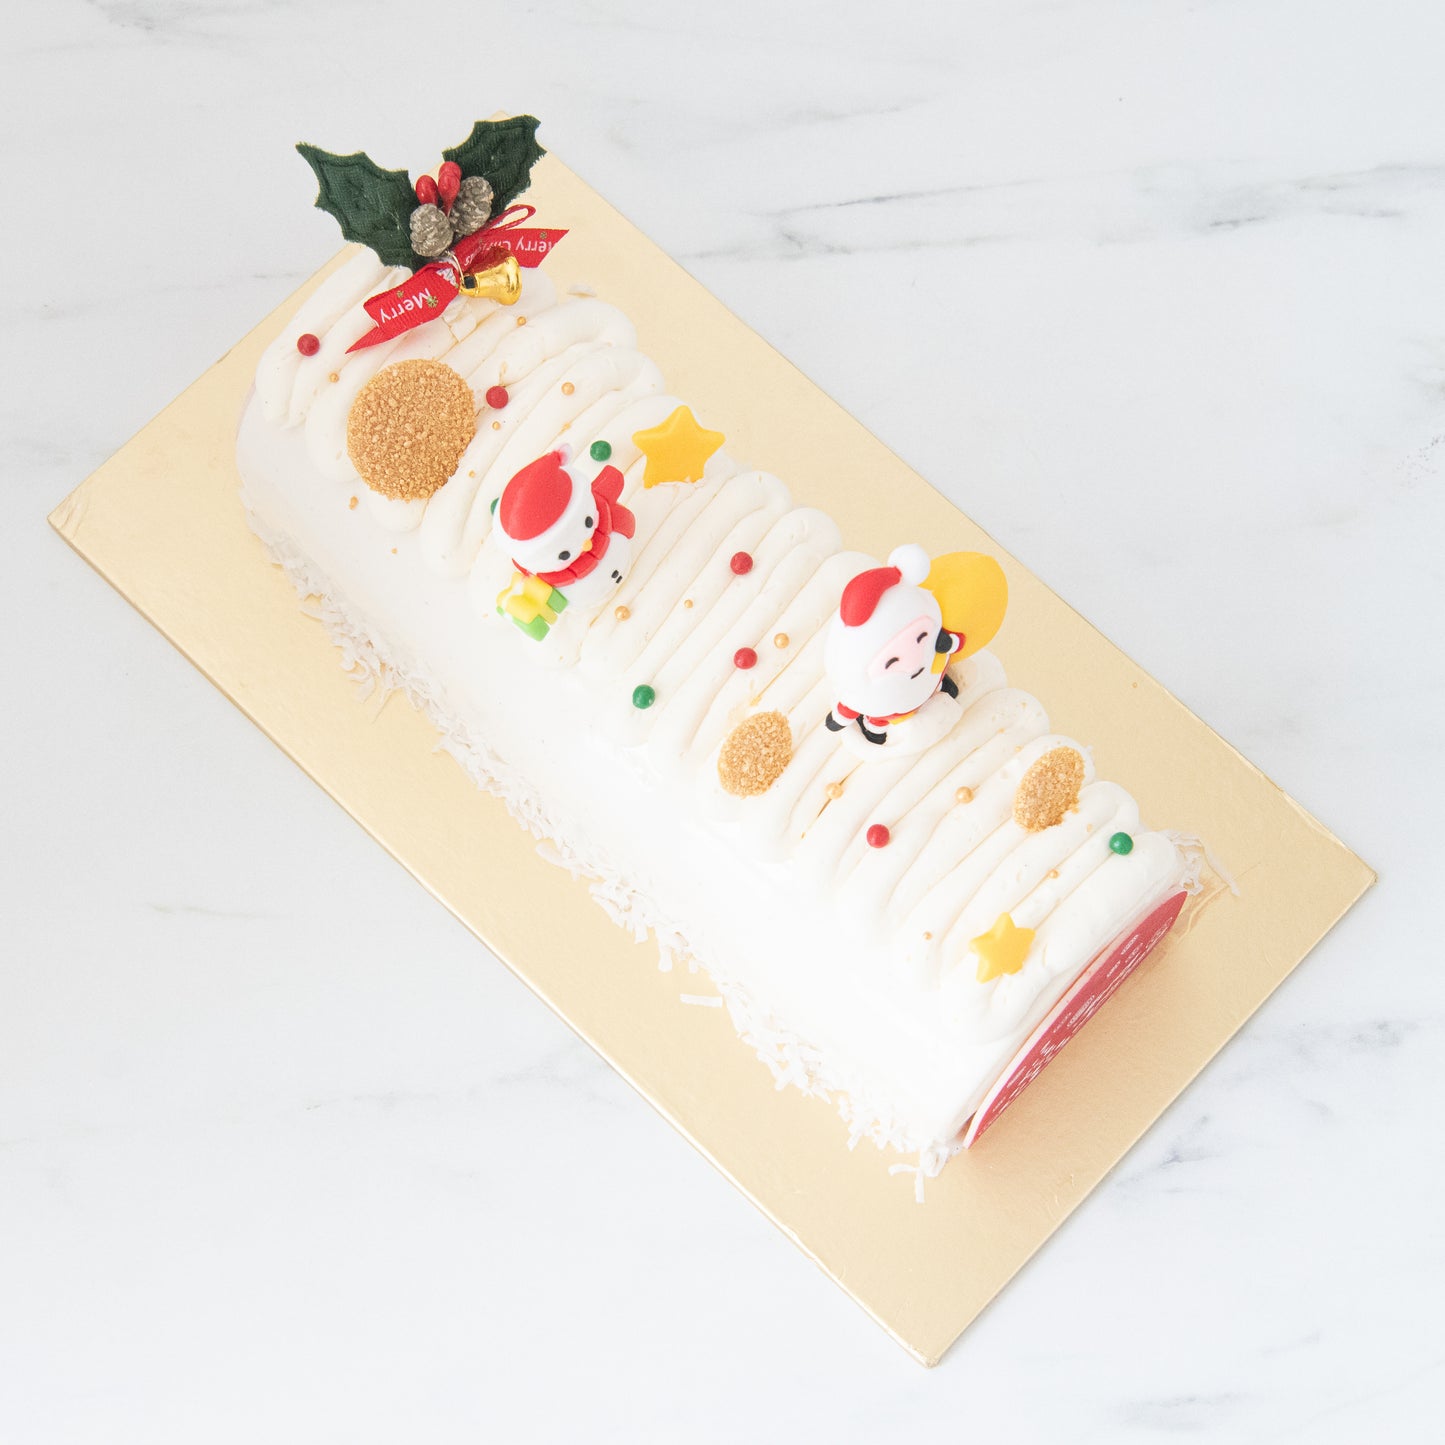 Ho ho ho! | Merry Christmas | A Holiday Celebration Apple Log Cake 1kg | $65.80 Nett